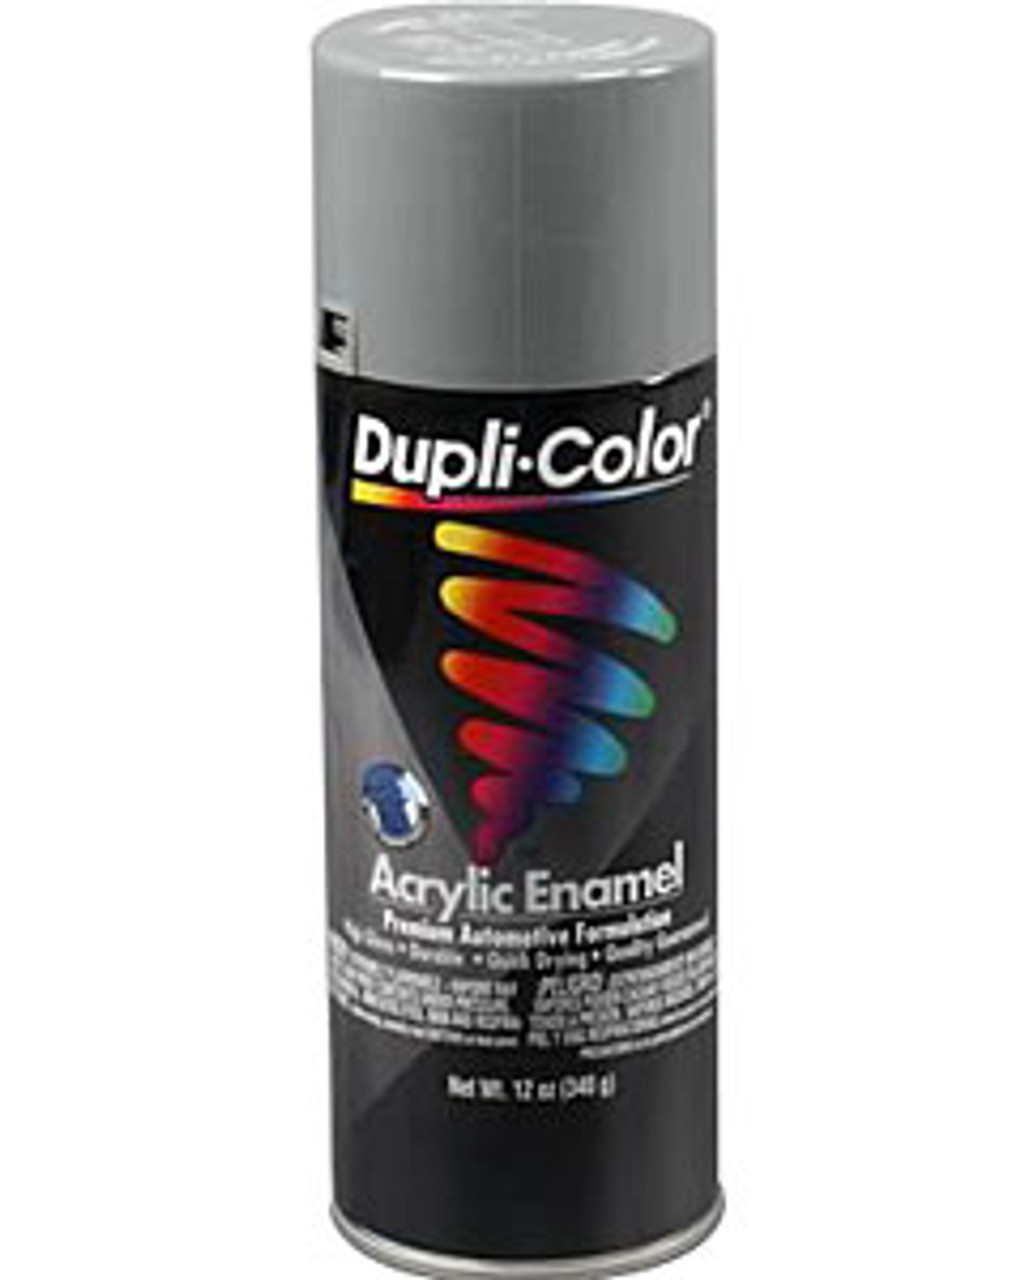 Dupli-Color Medium Gray Enamel Paint 12oz - SHEDA1610